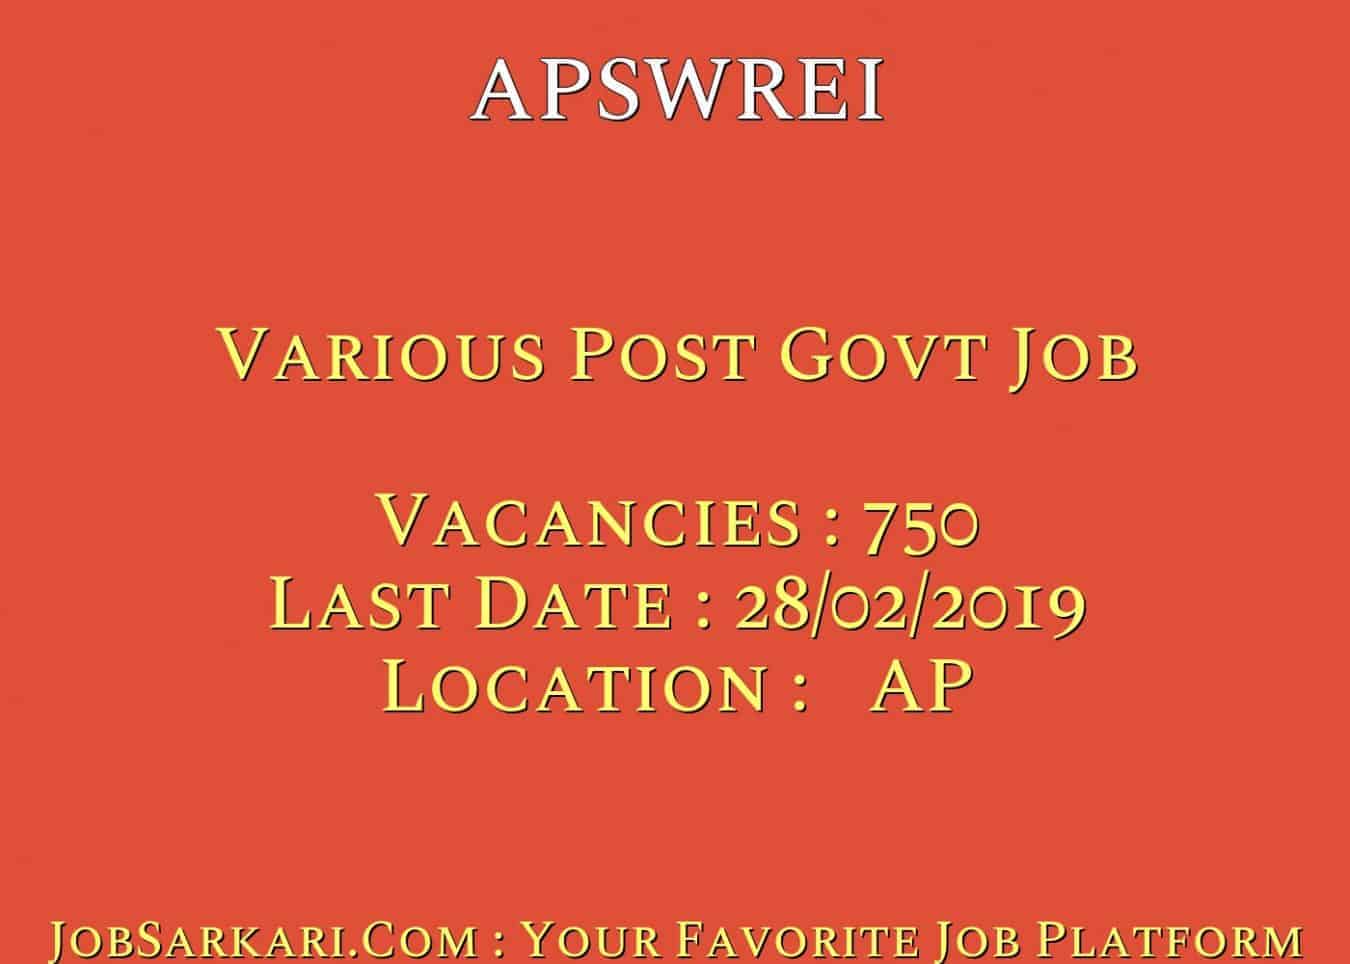 APSWREI Recruitment 2019 For Various Post Govt Job